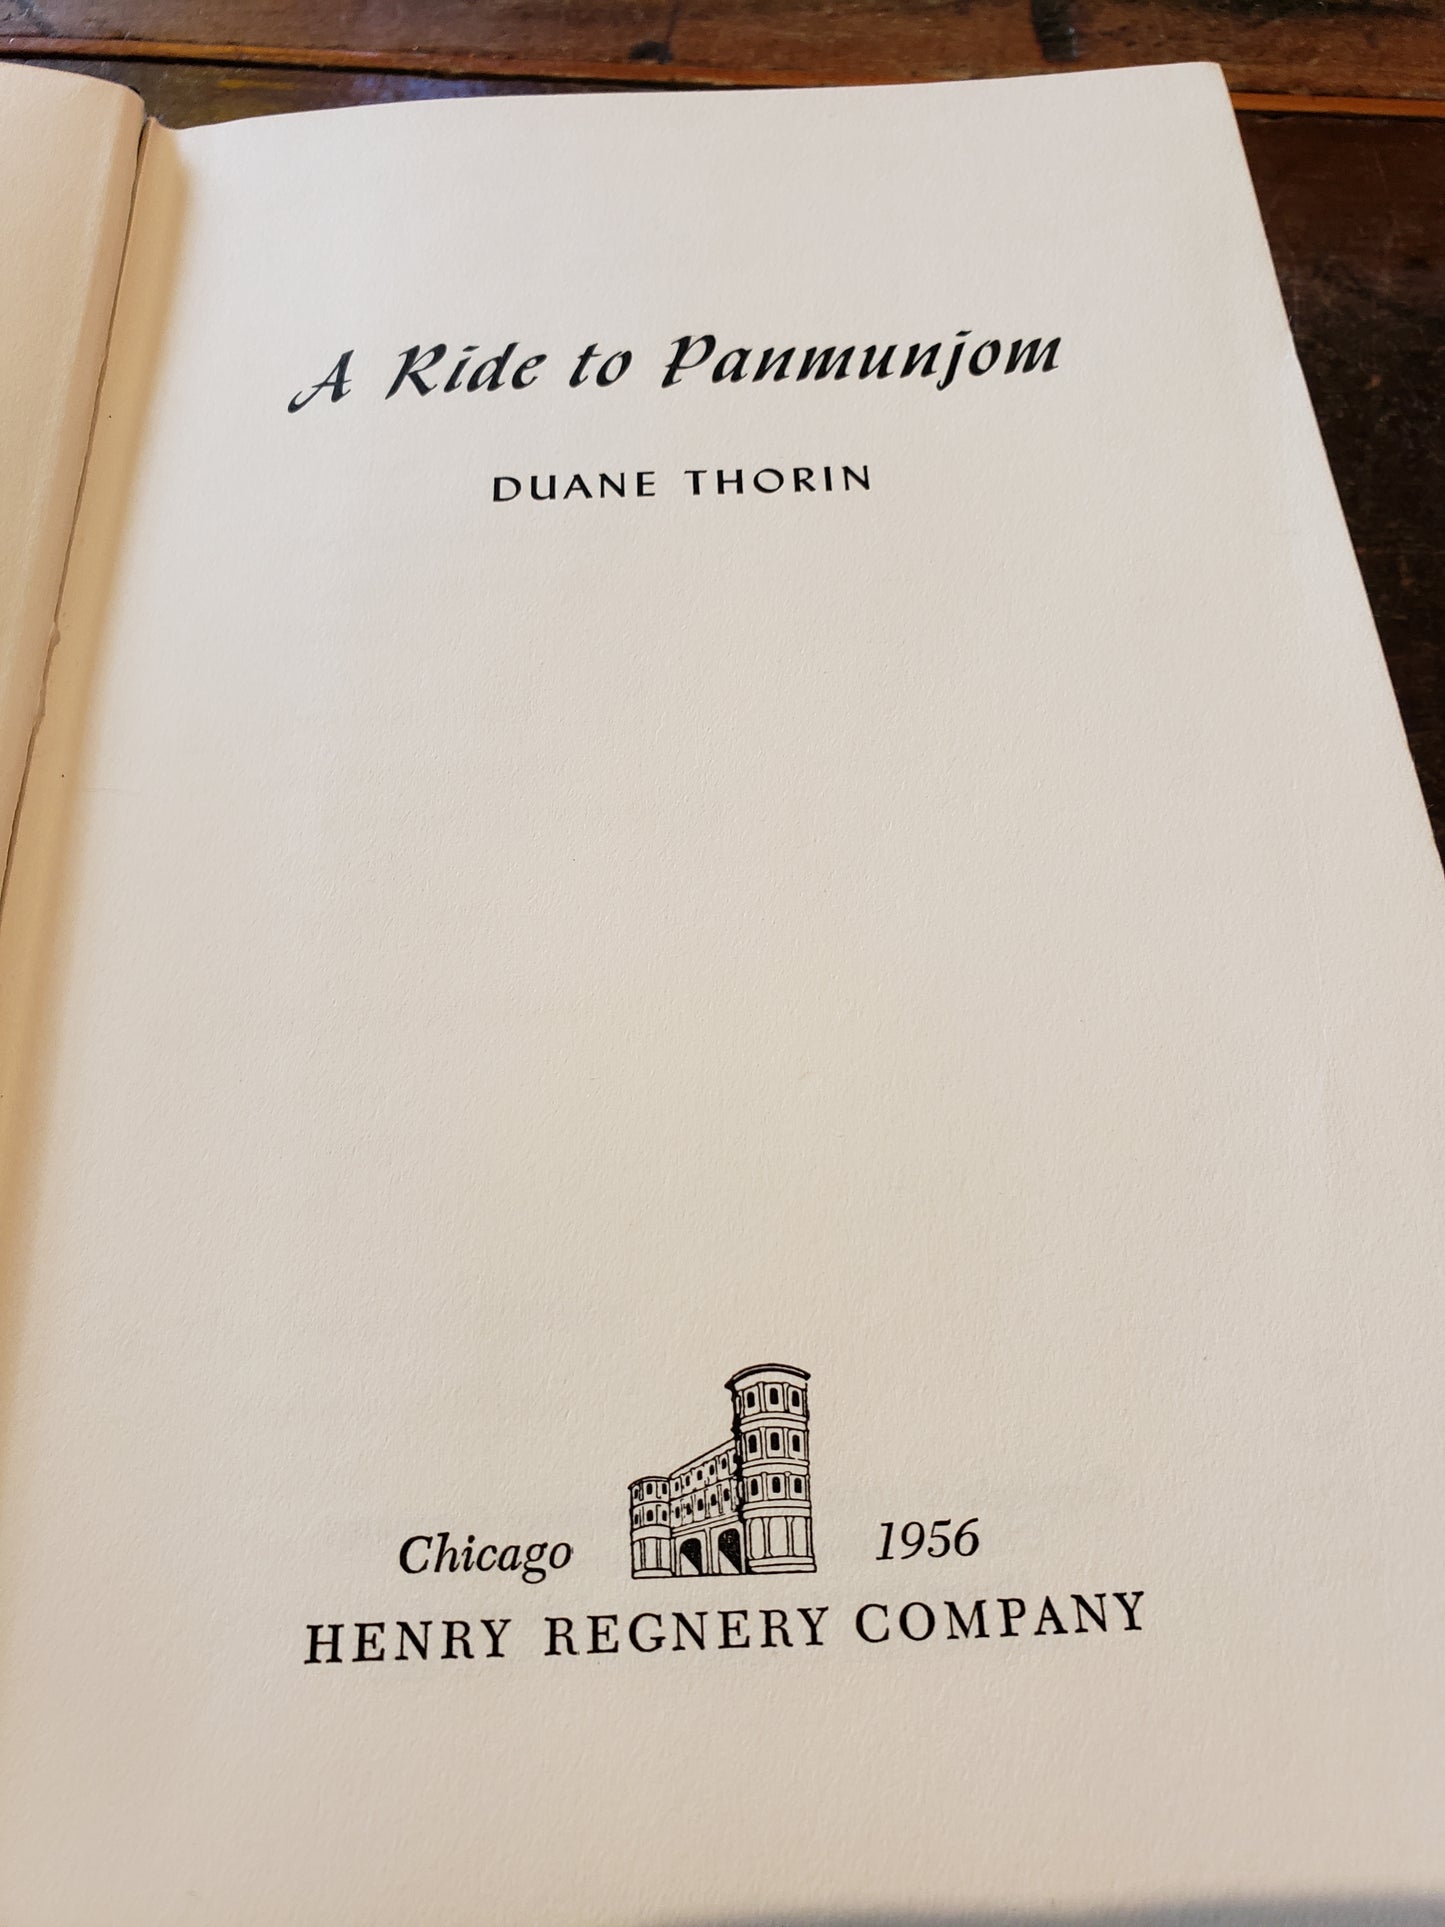 A Ride to Panmunjon, by Duane Thorin